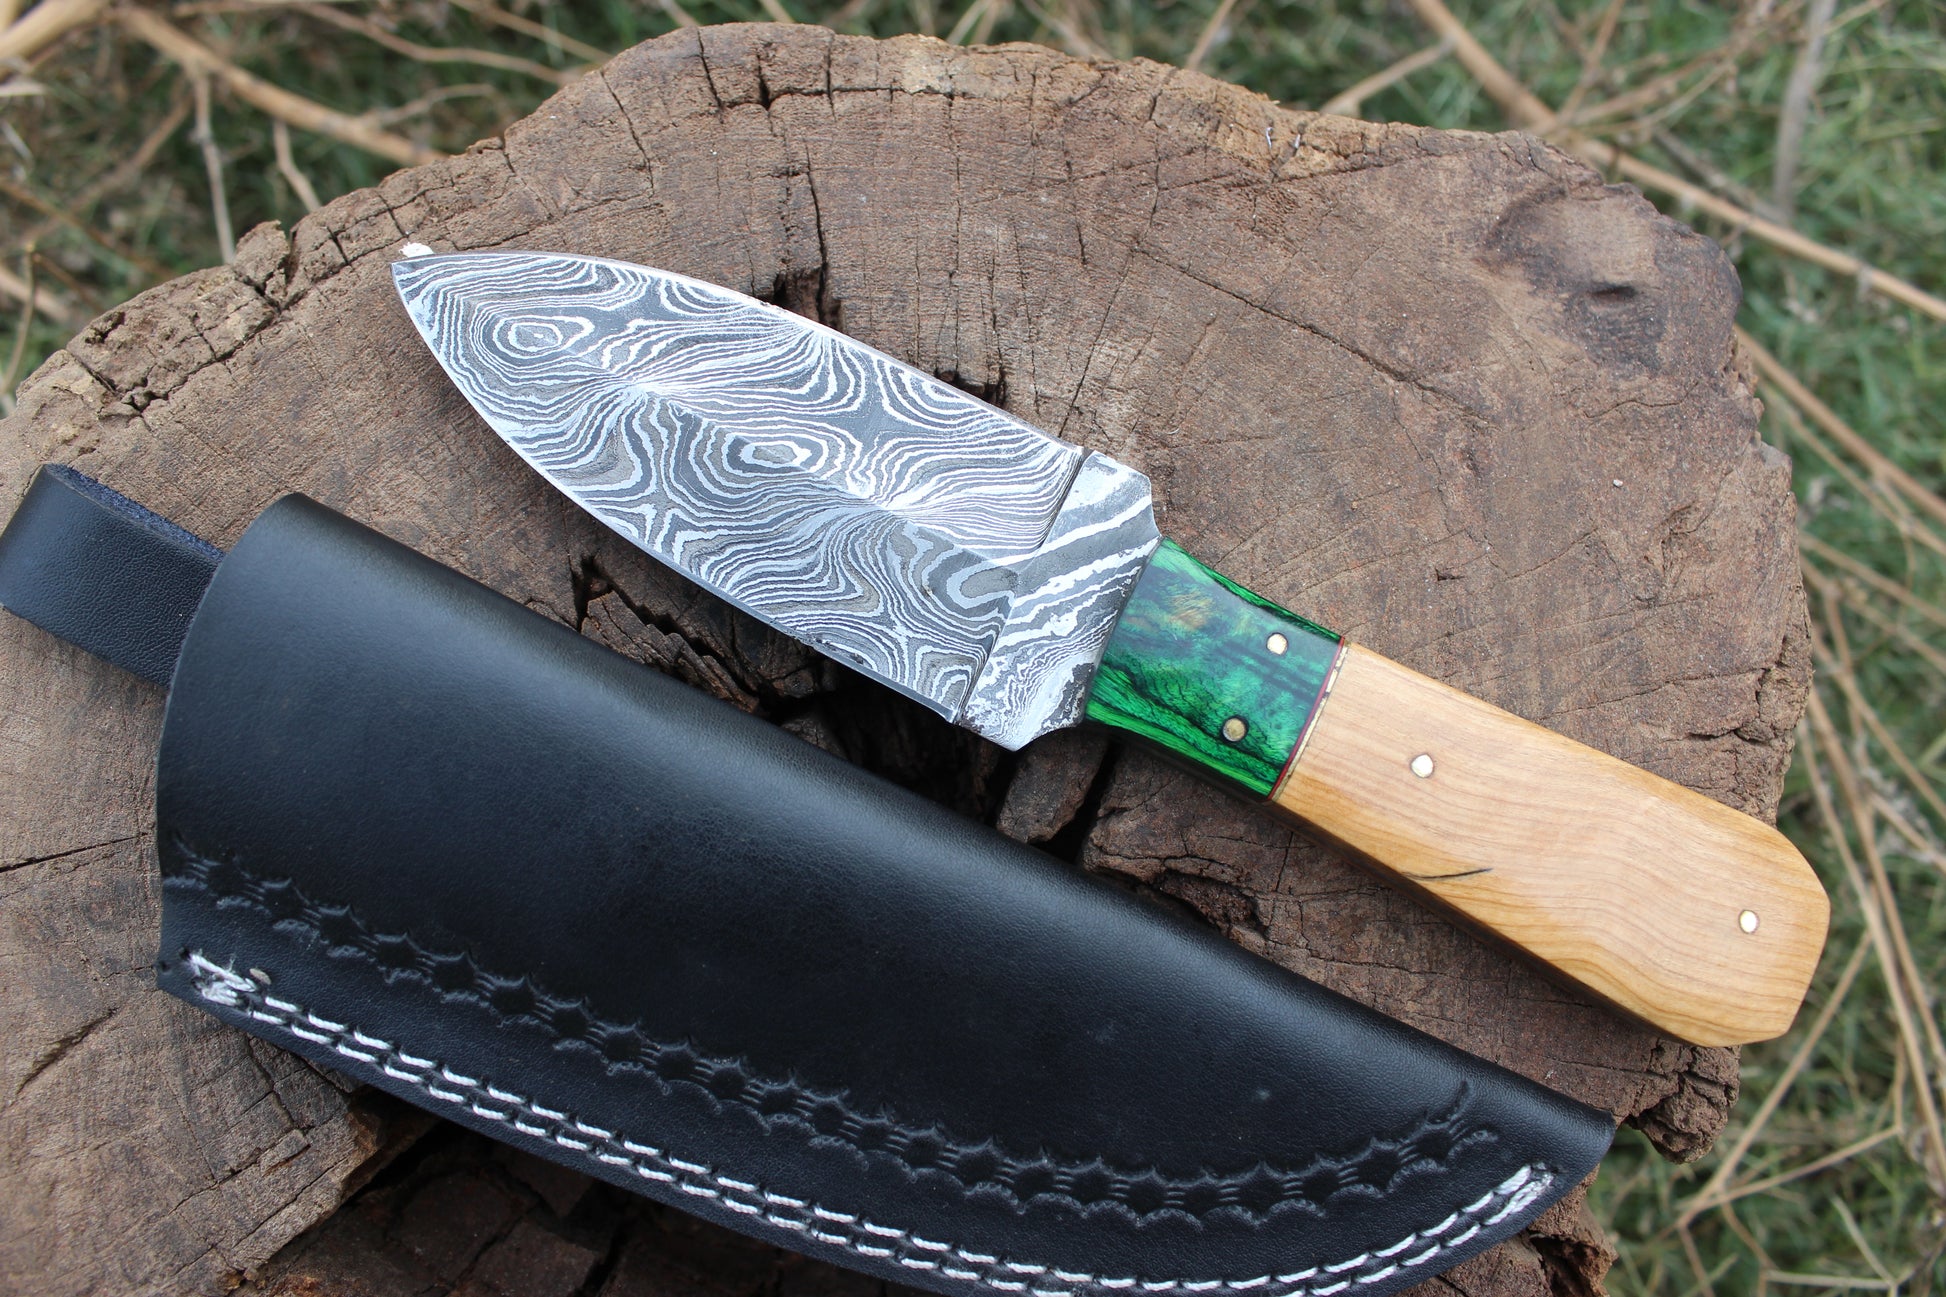 Handmade Damascus Skinner knife - Camping Knife - Wood Handle & Damasc